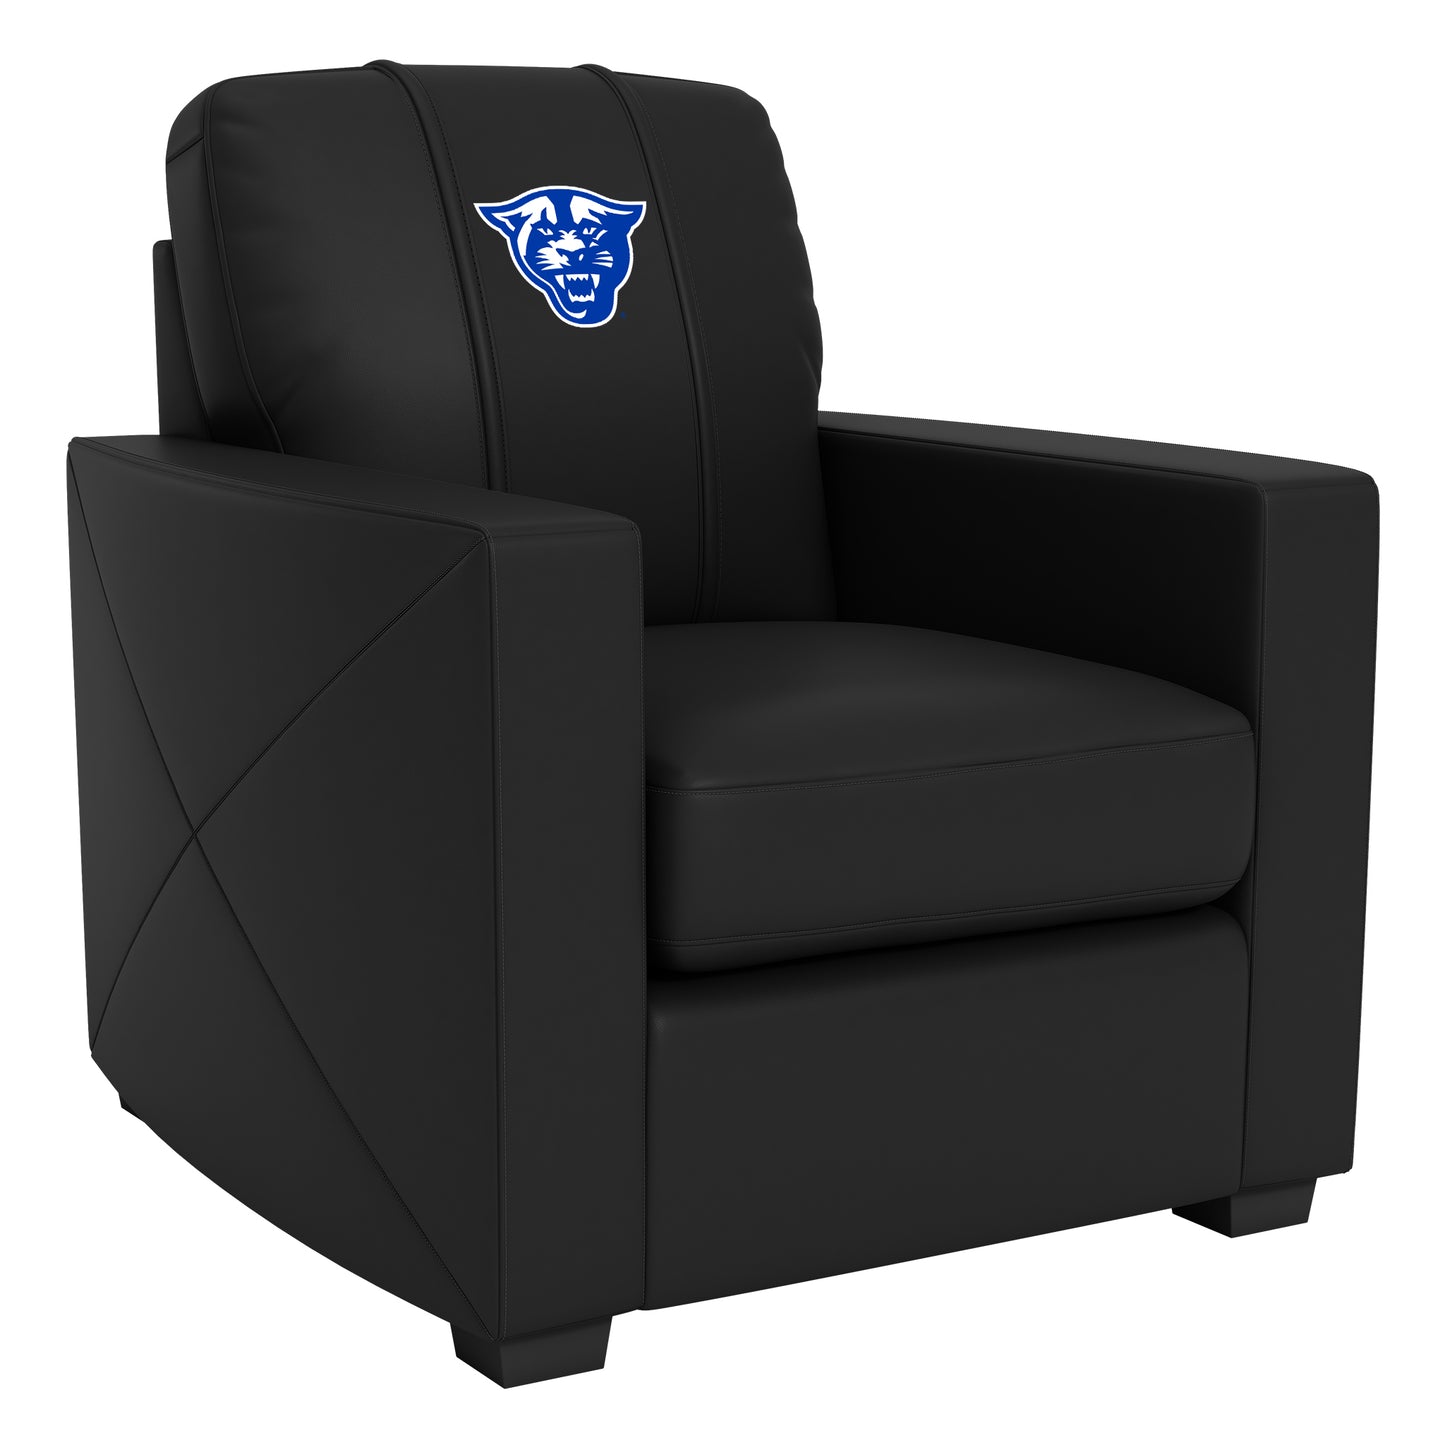 Silver Club Chair with Georgia State University Alternate Logo